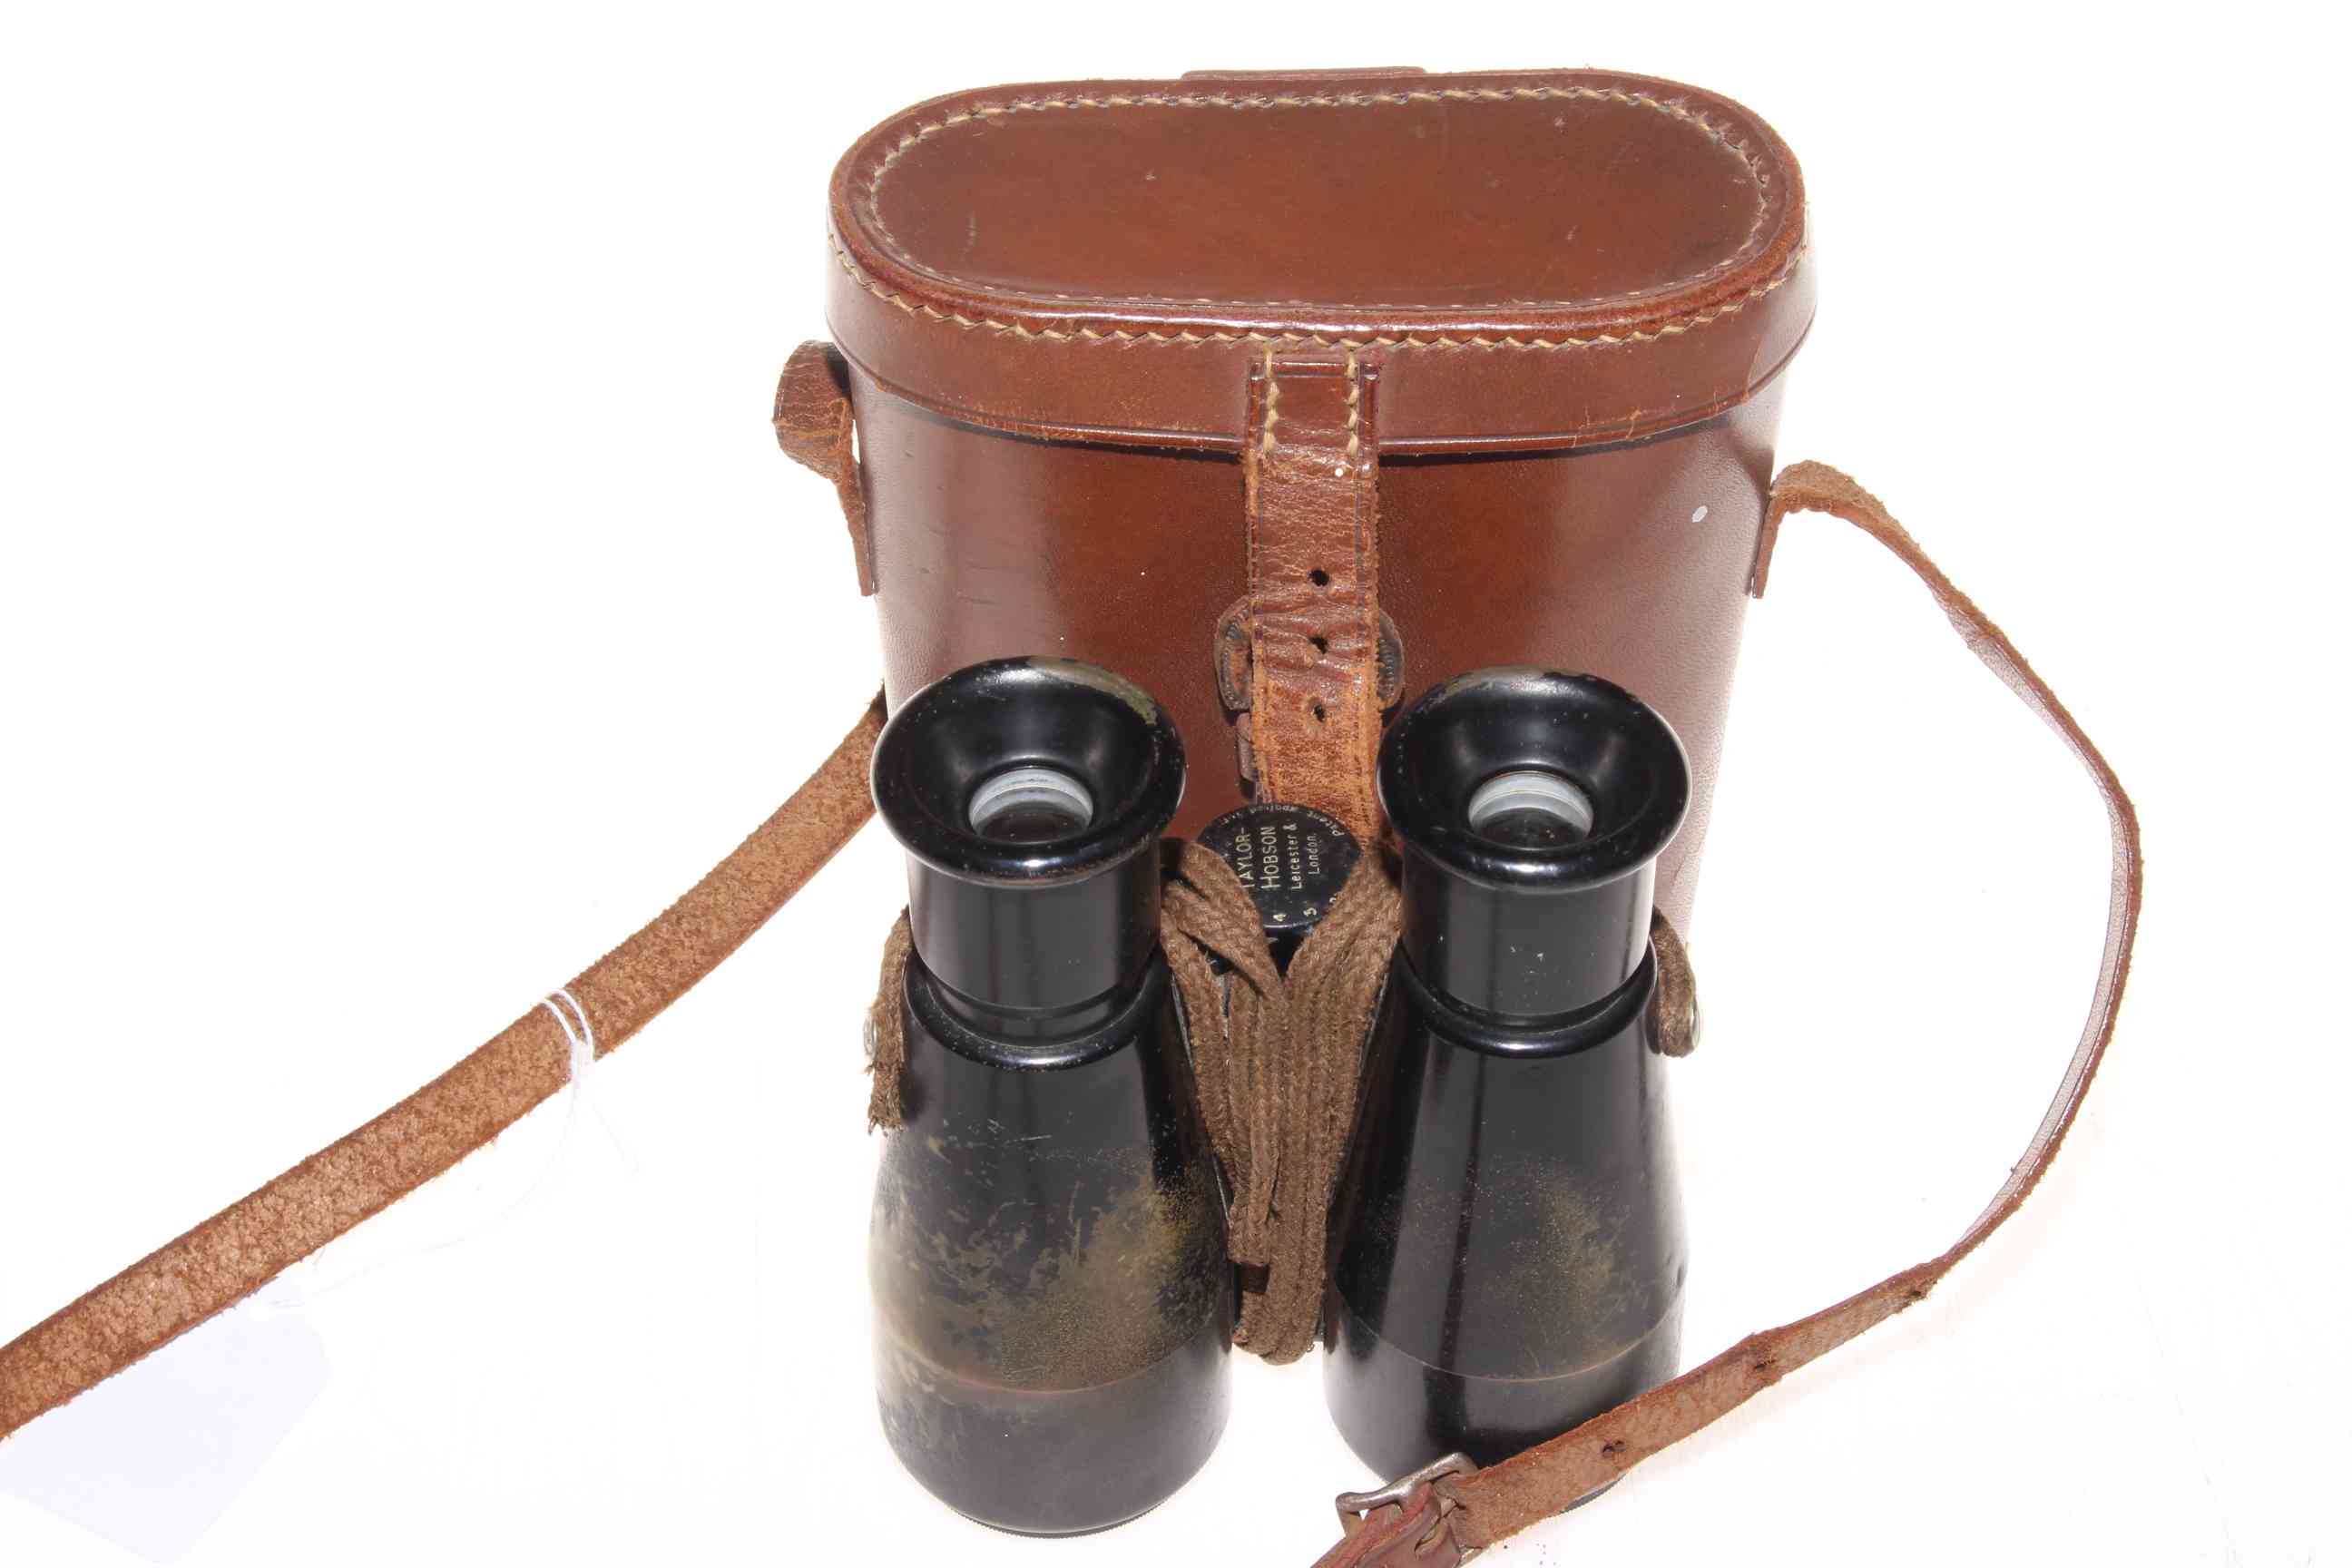 Taylor Hobson London hunting binoculars, cartridge belt and gun cleaning equipment. - Image 2 of 2